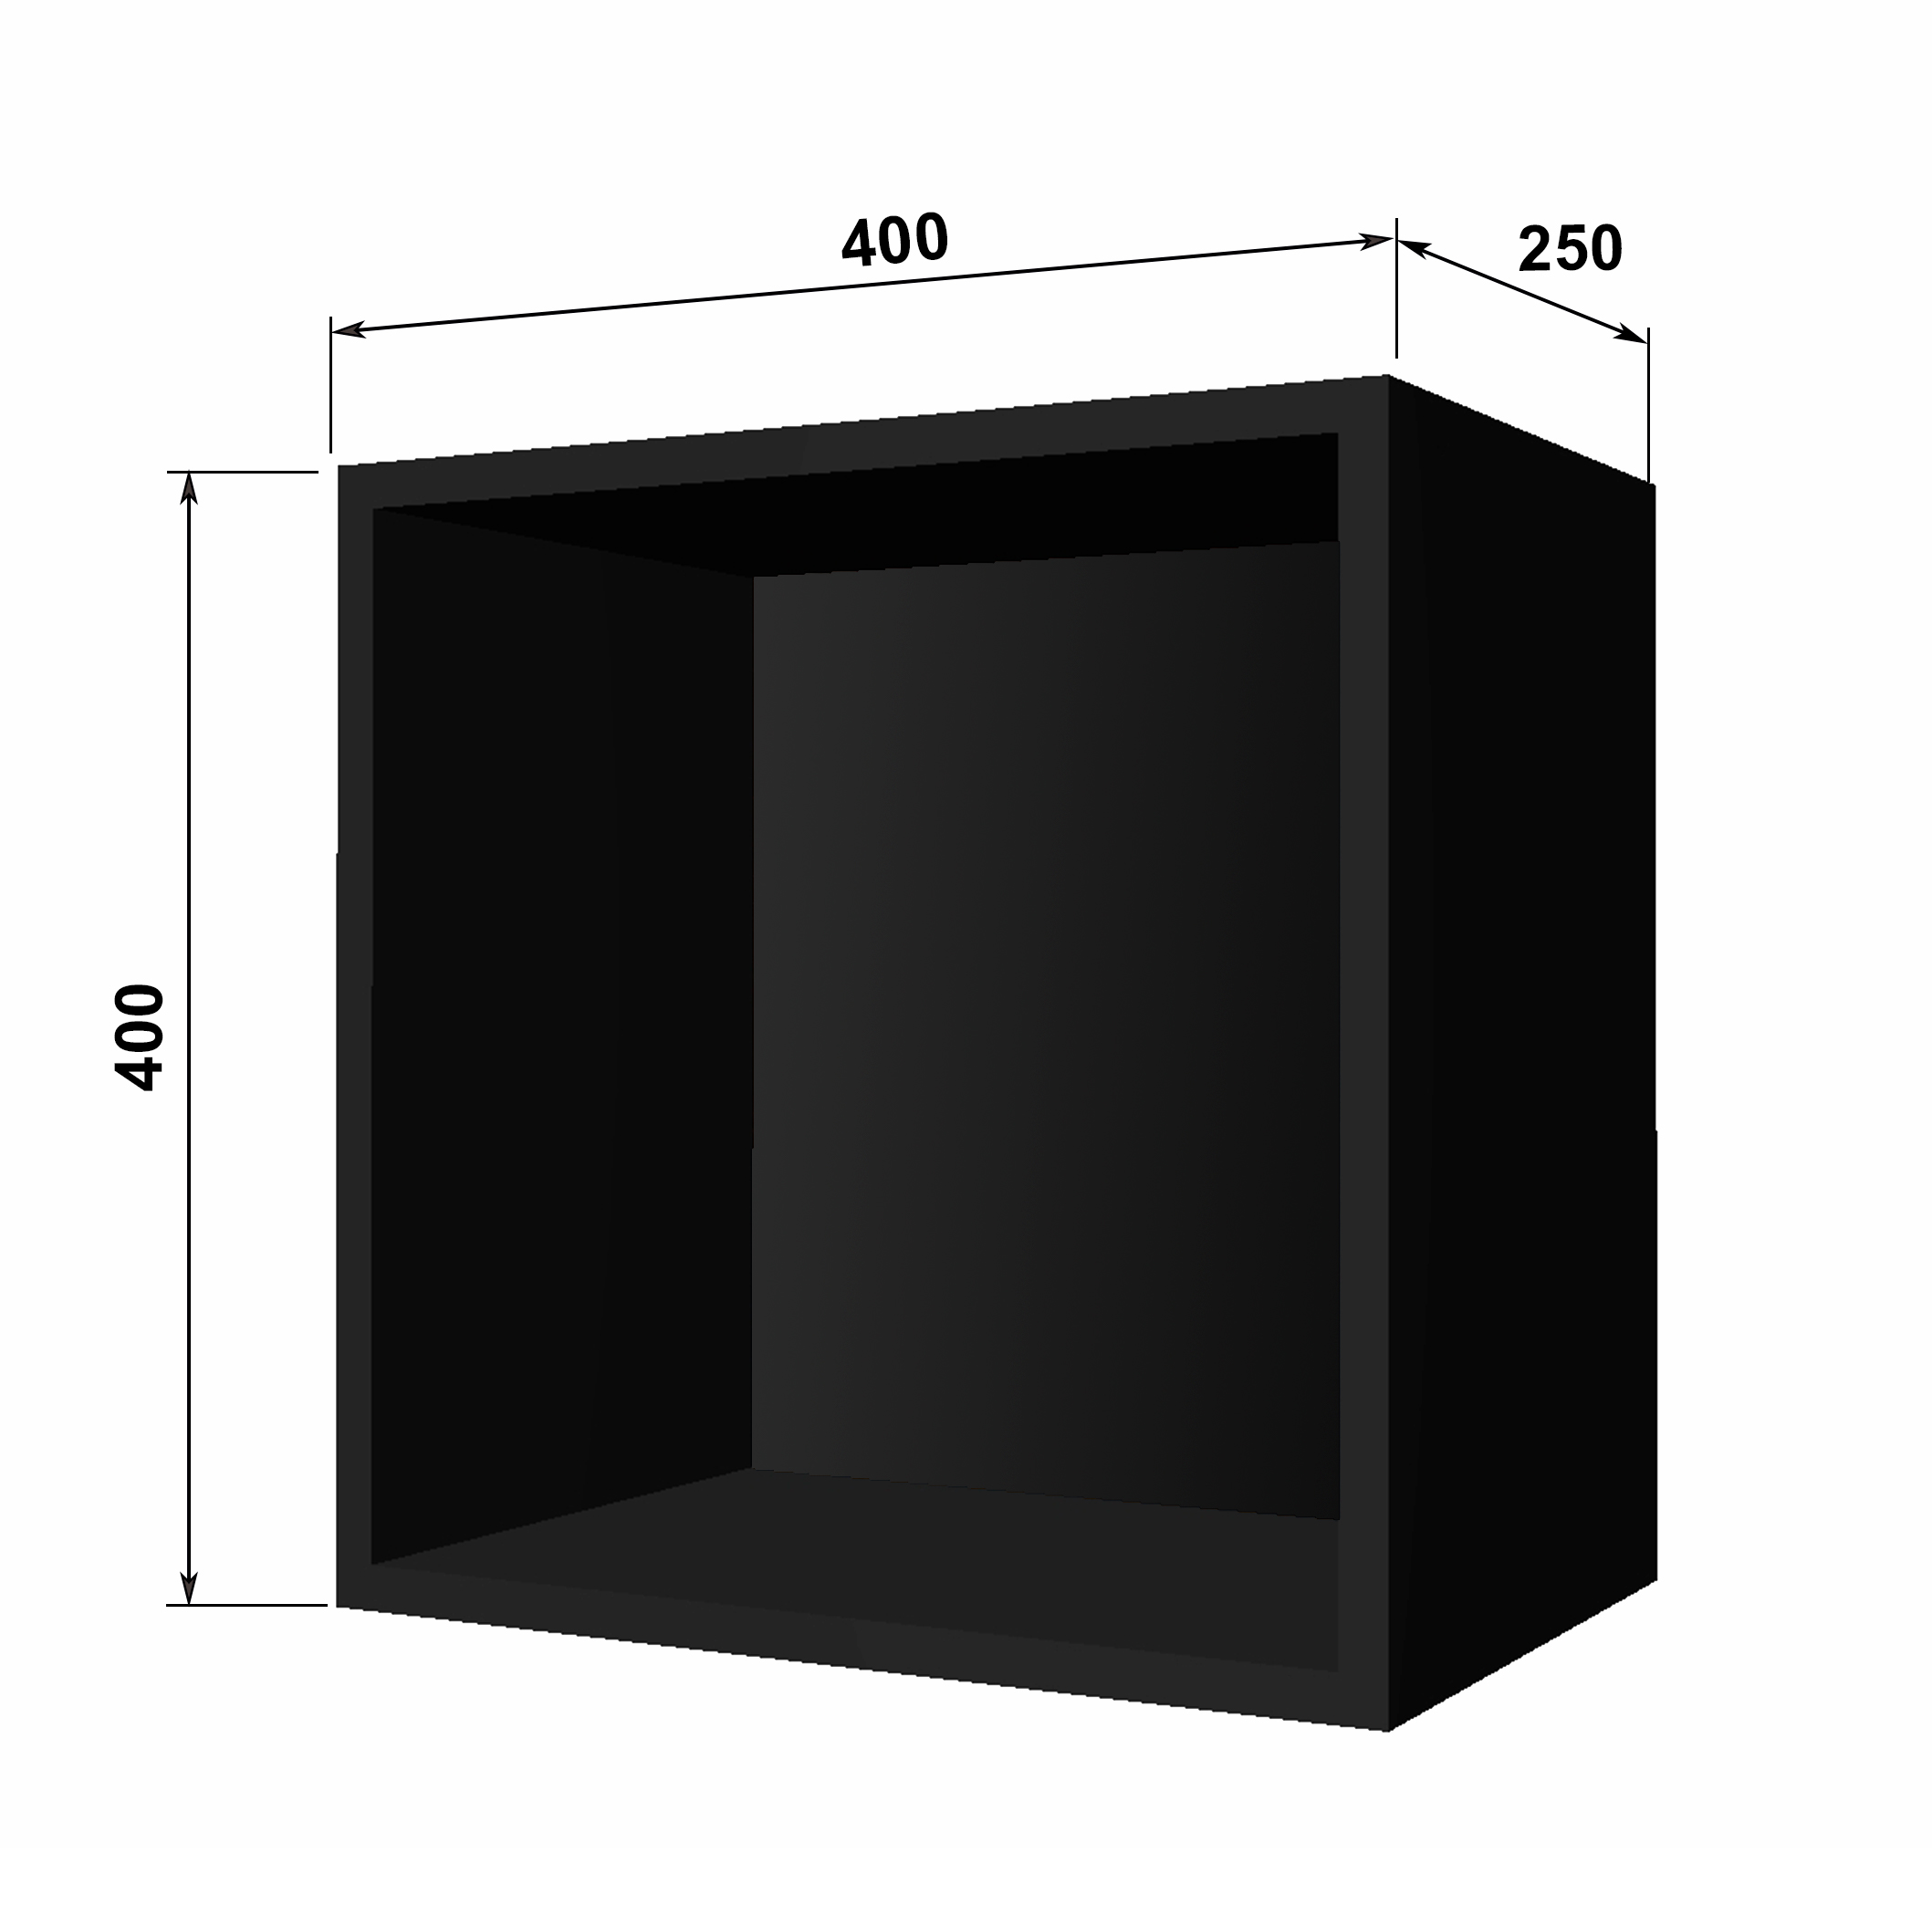 Shelf 400mm x 400mm x 250mm, Black body, Back Panel MDF - foto 1